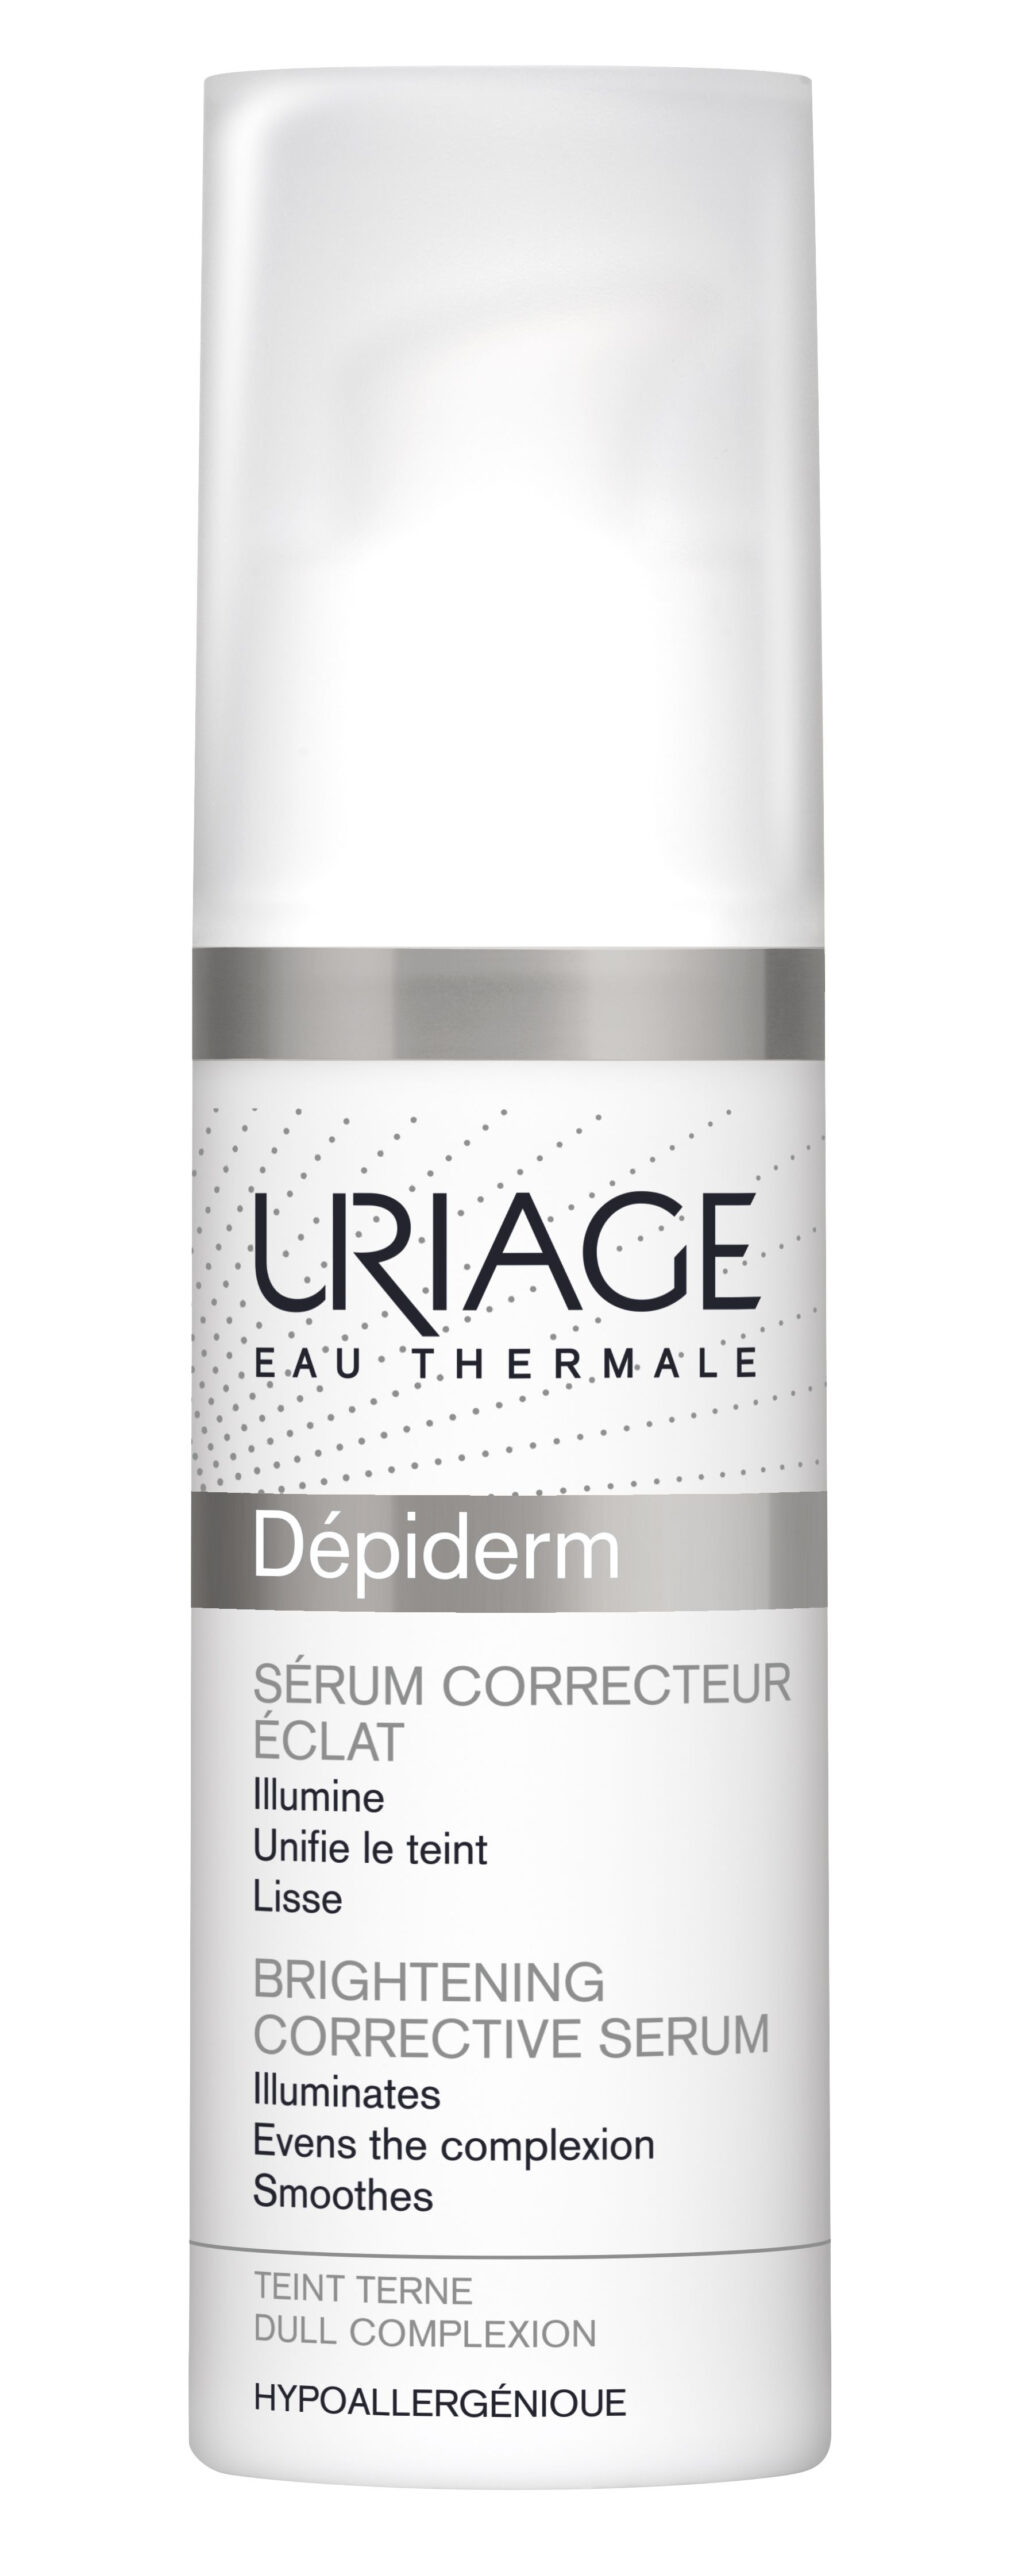 Uriage Depiderm Serum Correcteur F zesvětlující korekční sérum 30 ml Uriage